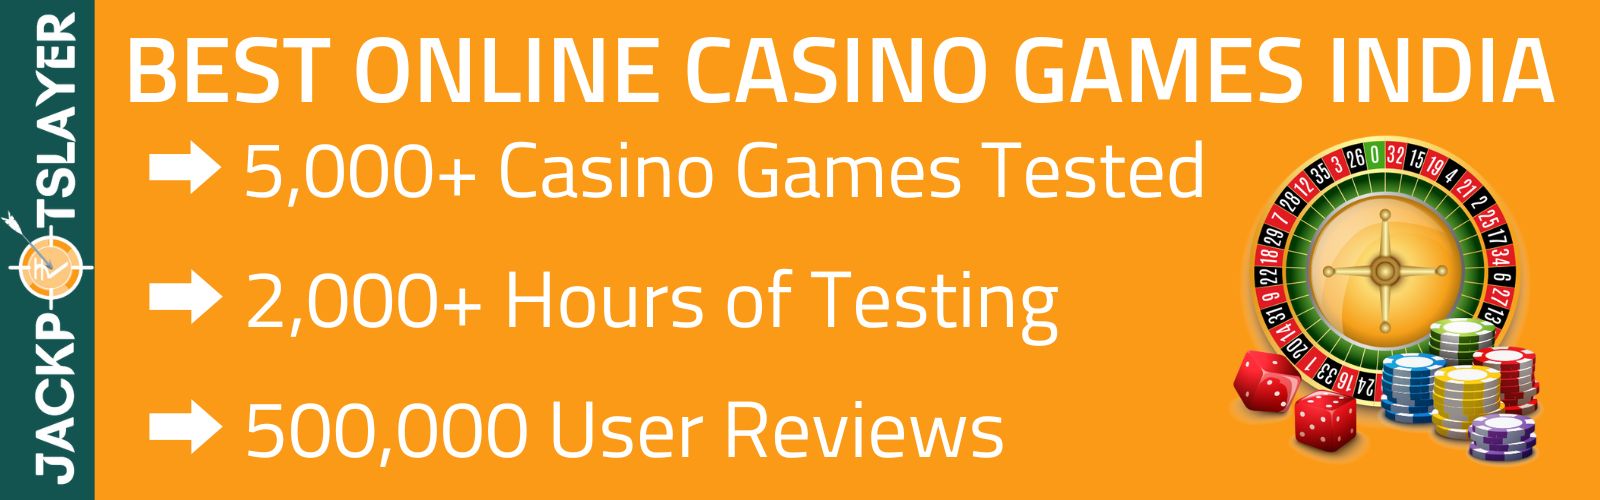 Best online casino games india